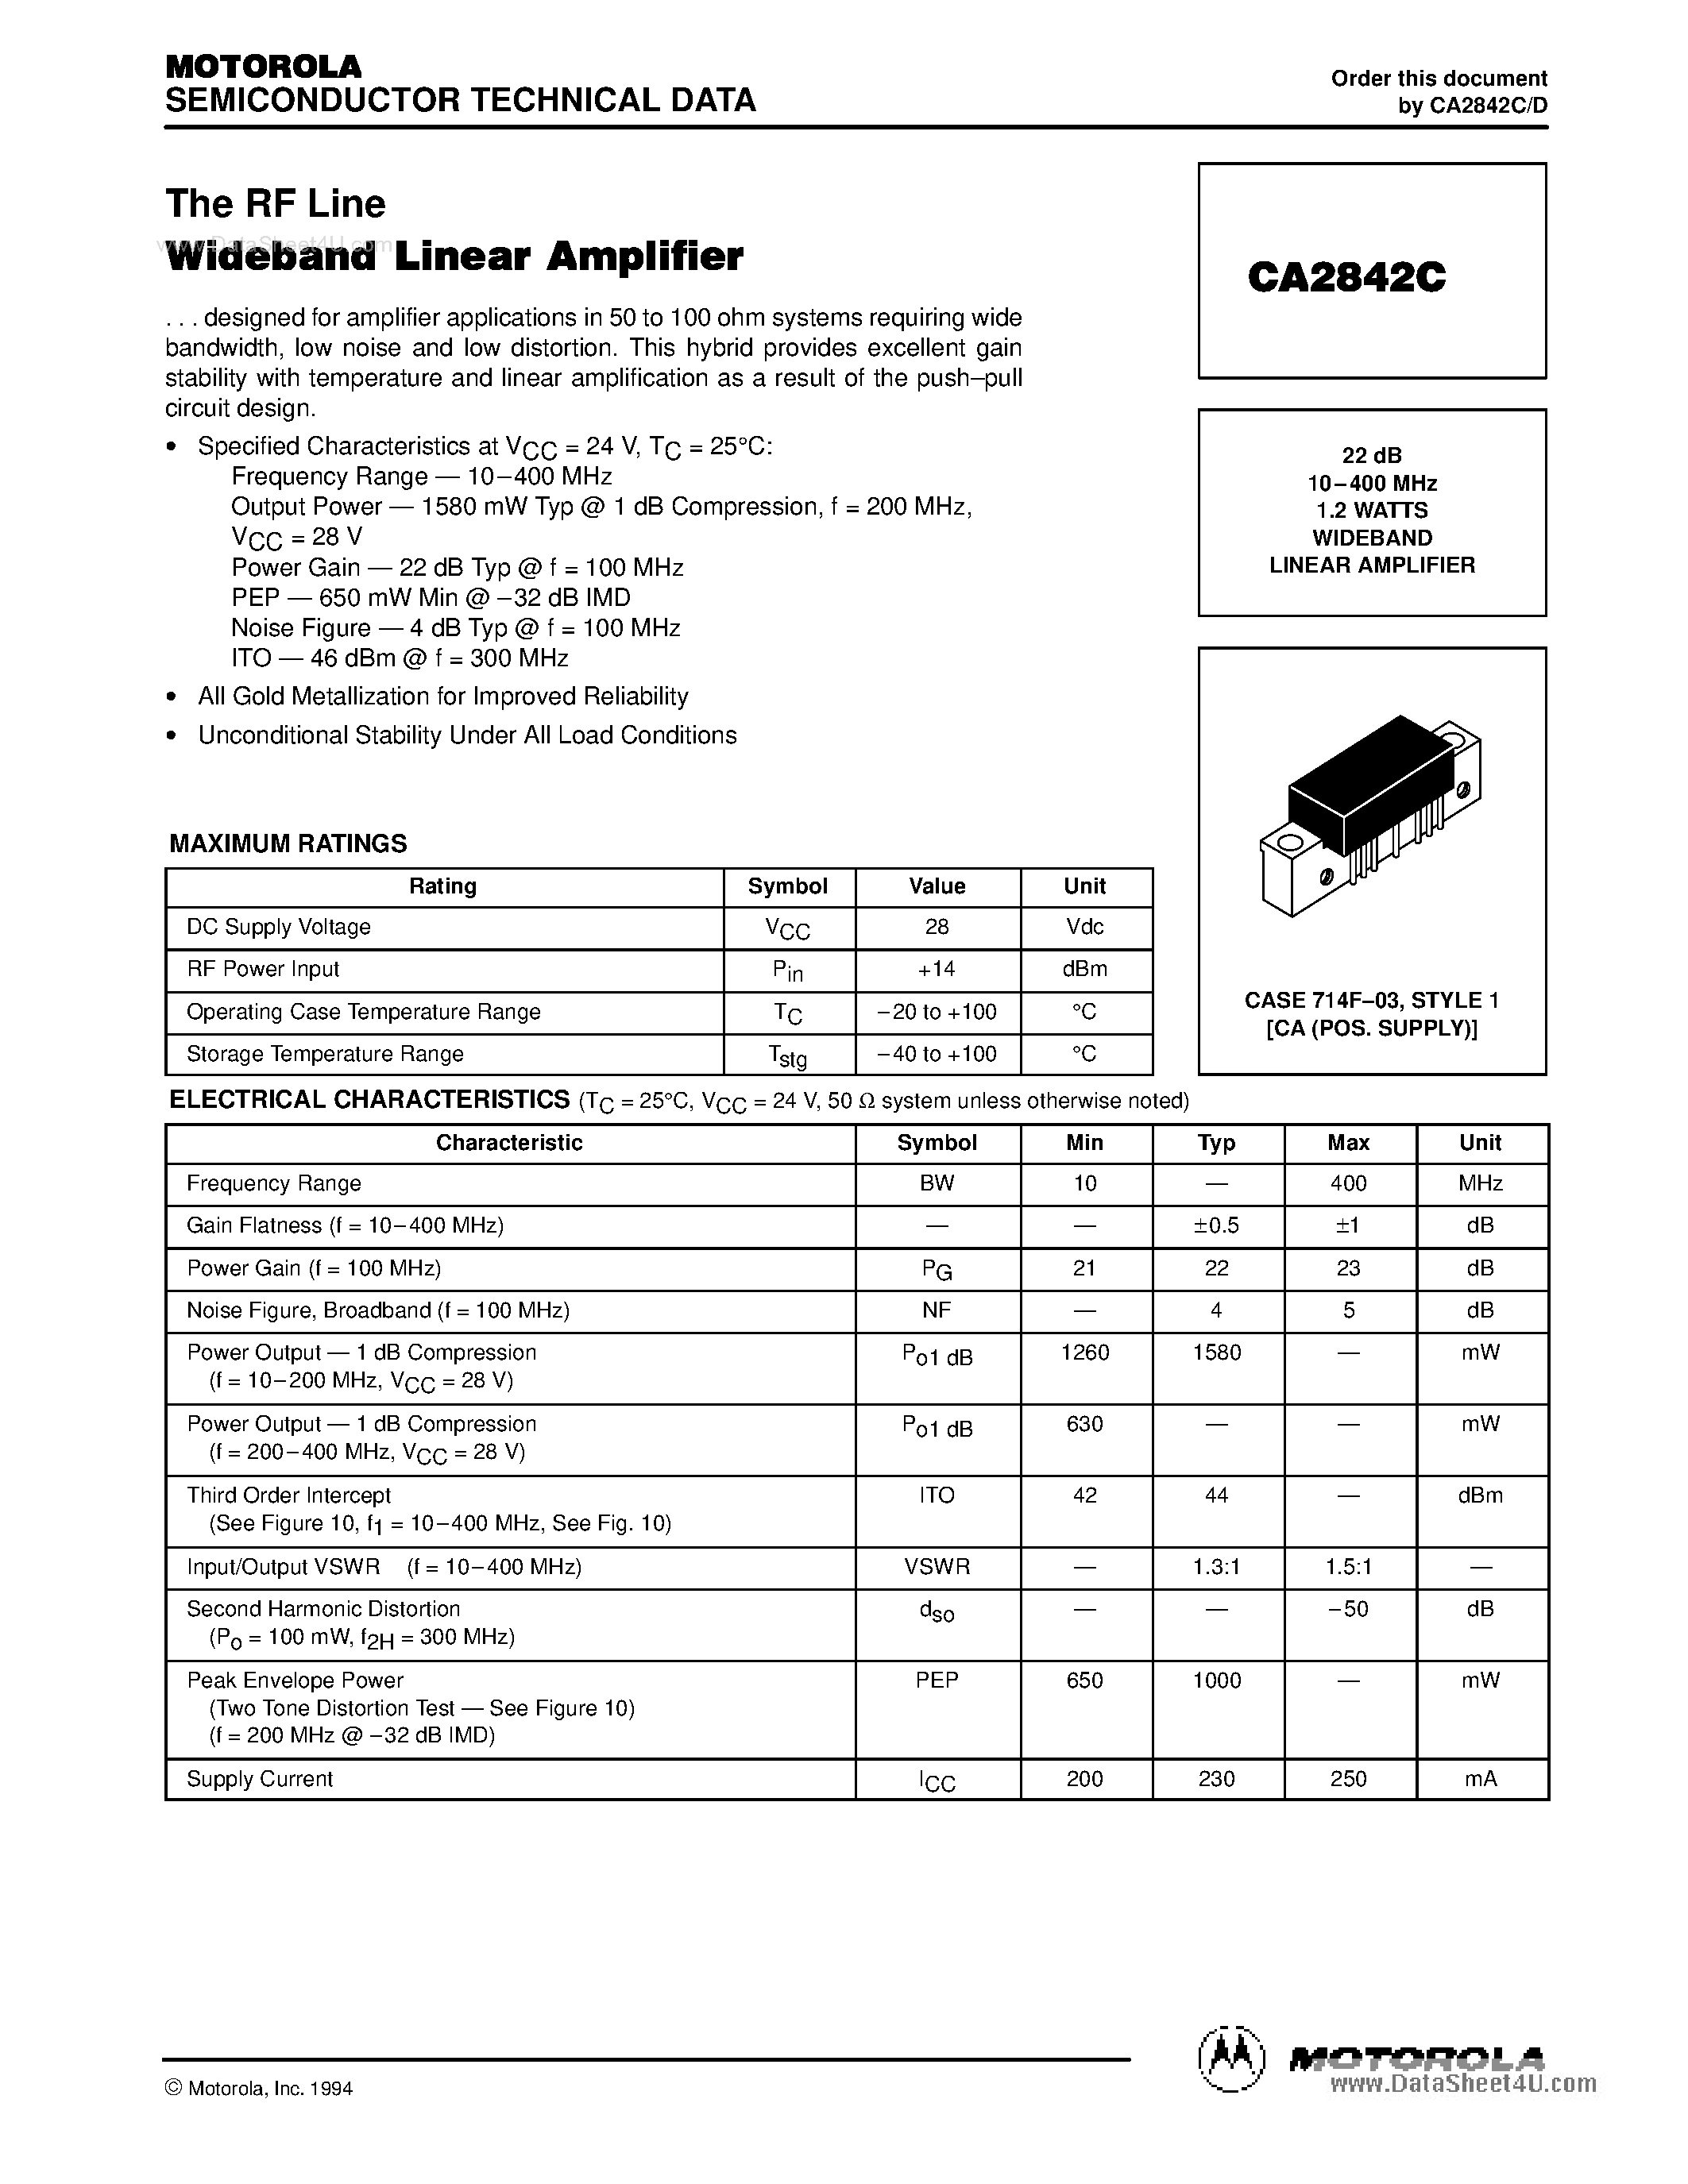 Datasheet CA2842C - 22 dB 10-400 MHz 1.2 WATTS WIDEBAND LINEAR AMPLIFIER page 1